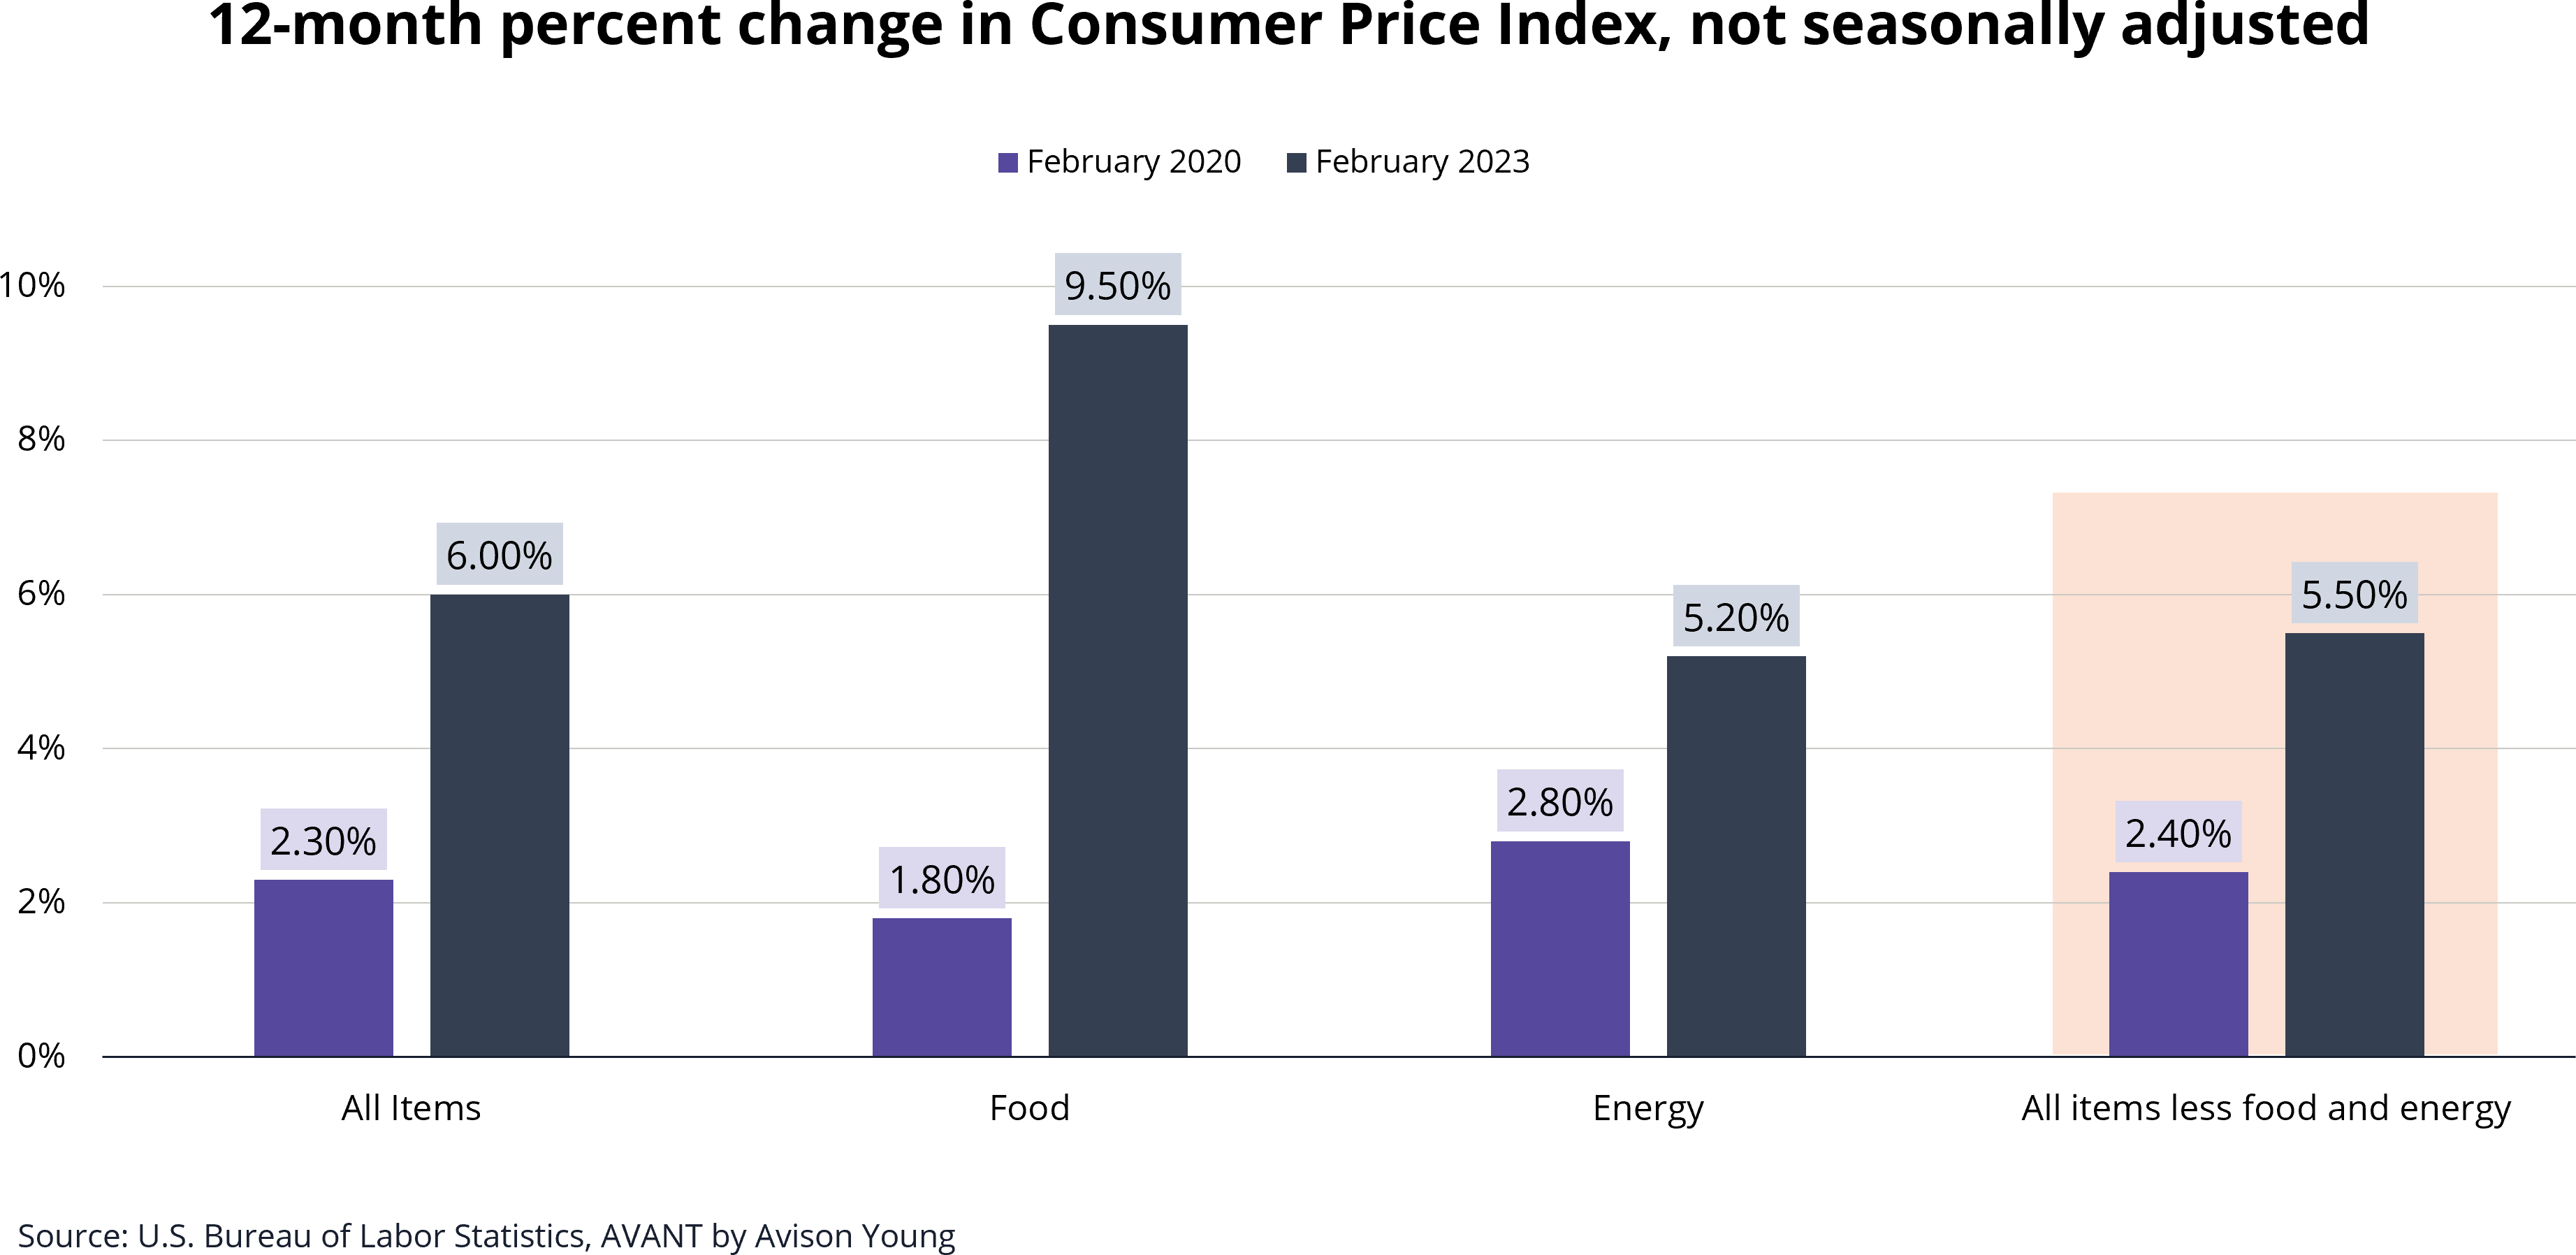 12-month percent change in consumer price index